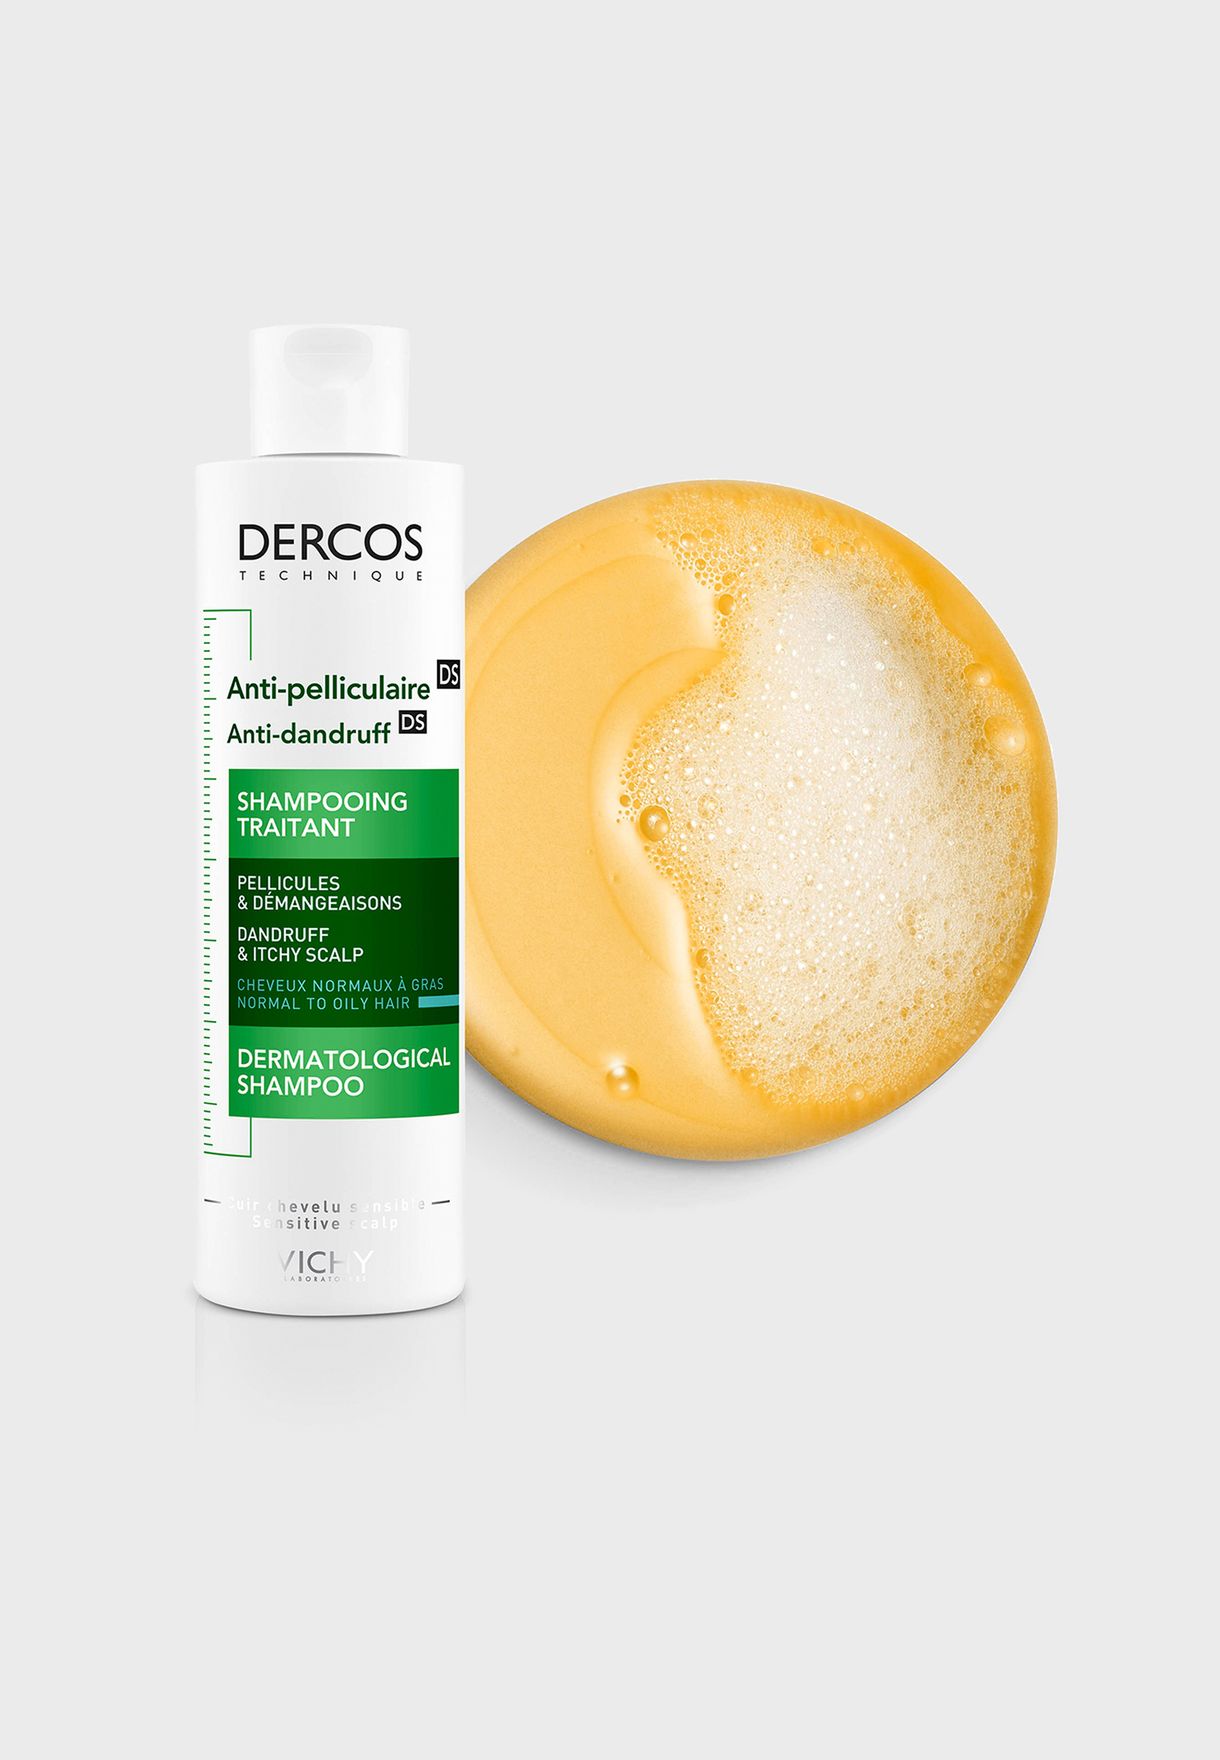 Dercos Anti-Dandruff Advanced Action Shampoo 200ml